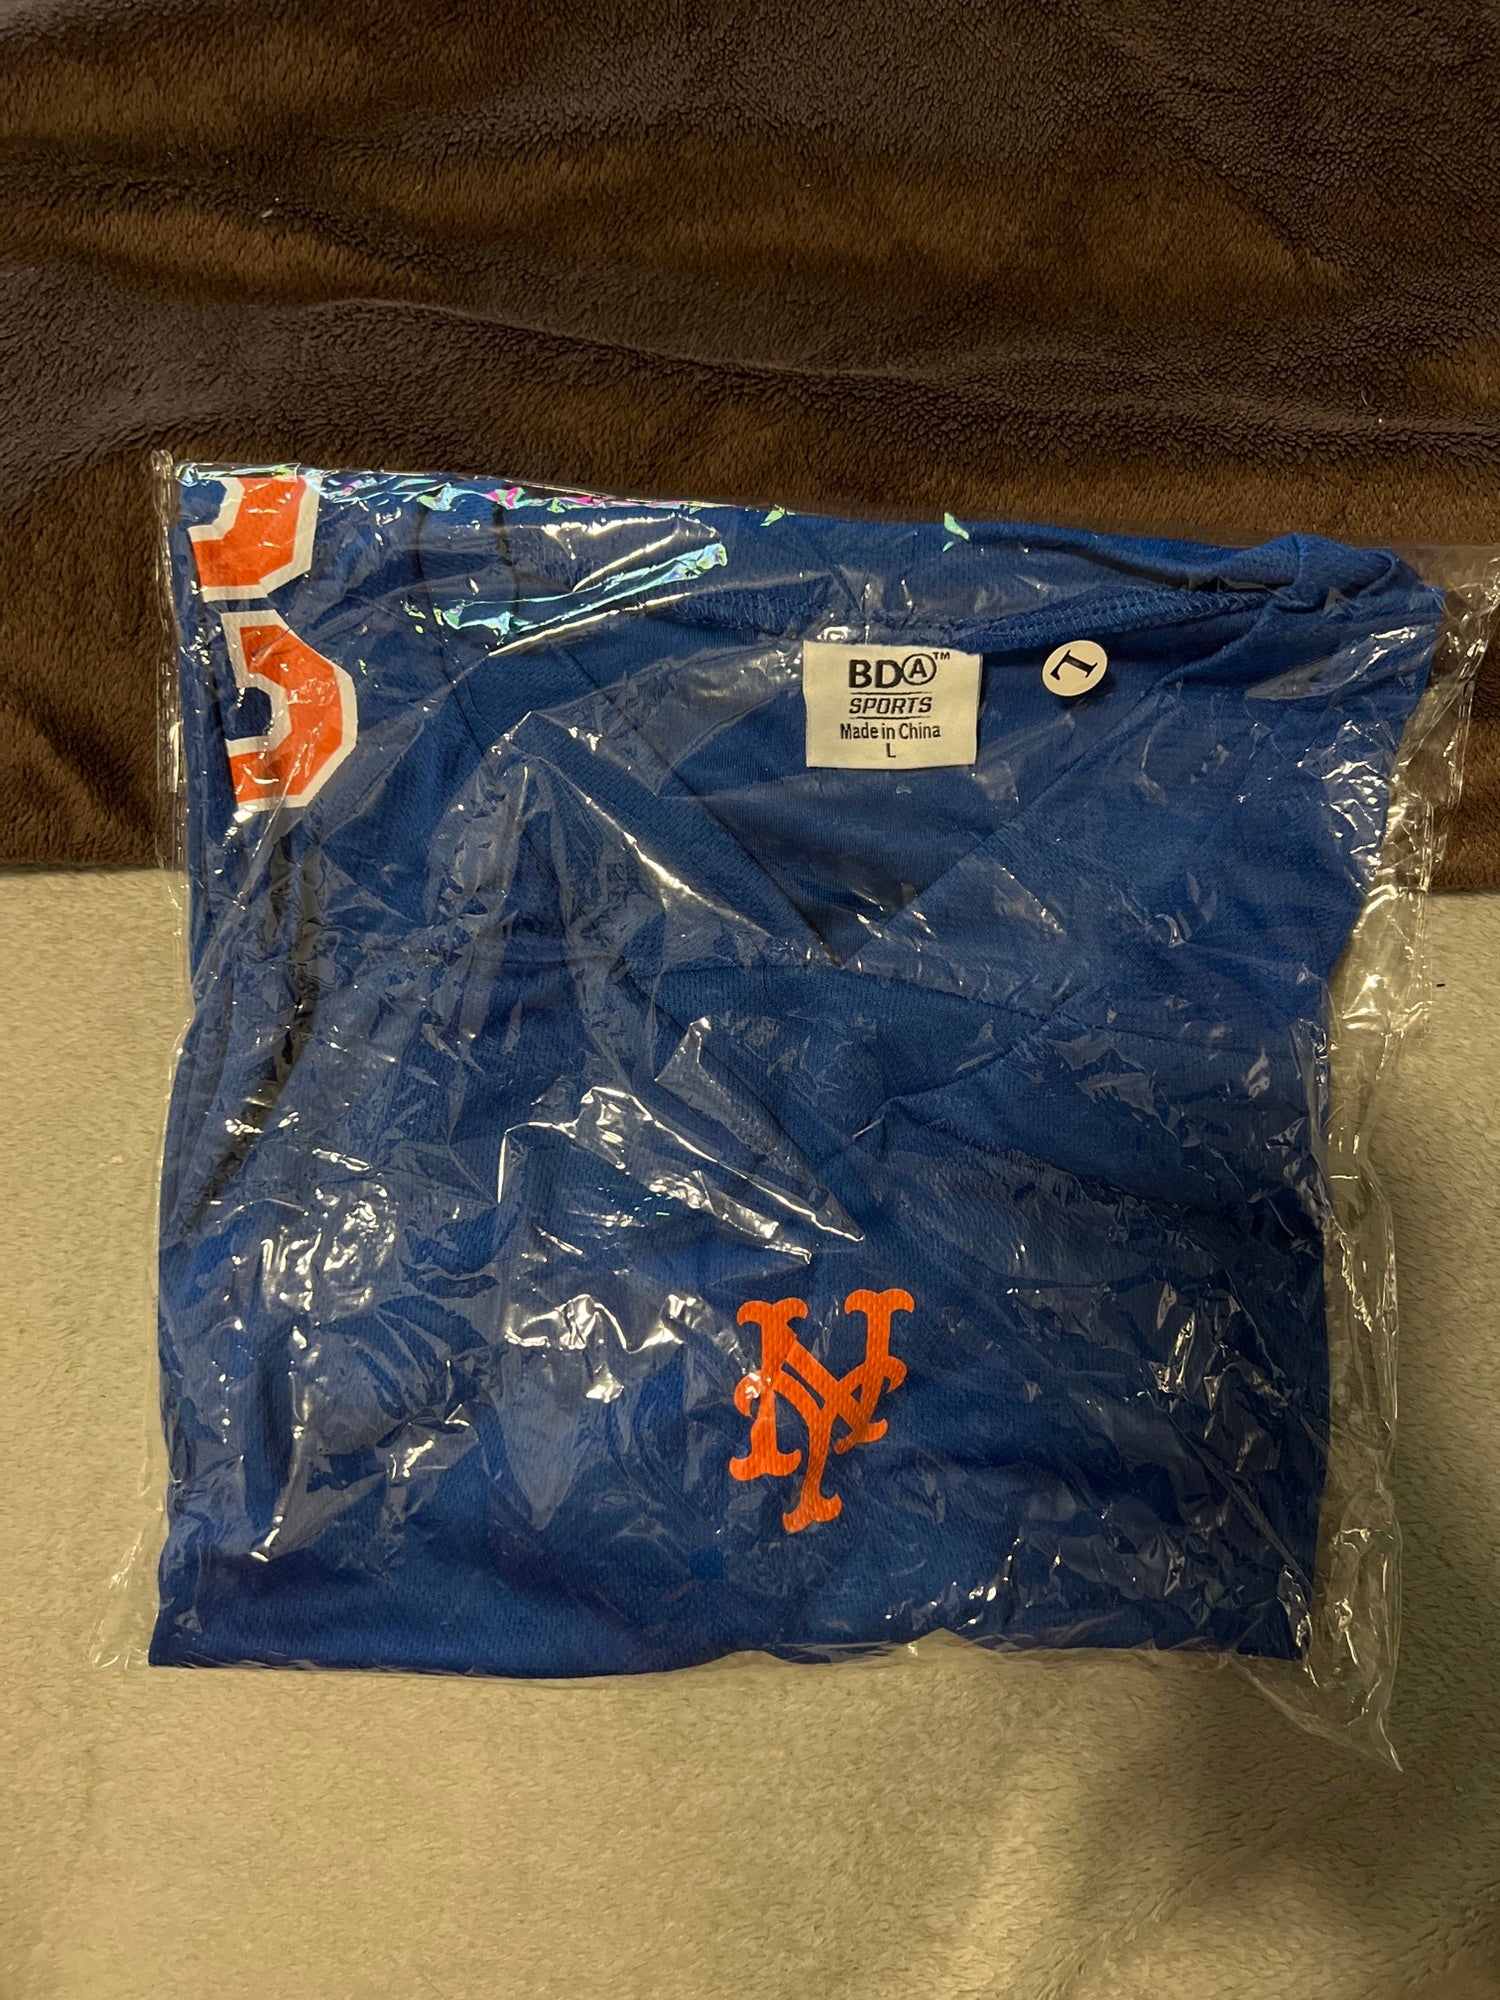 2023 New York Mets Number 23 Mets Football Jersey Giveaways 